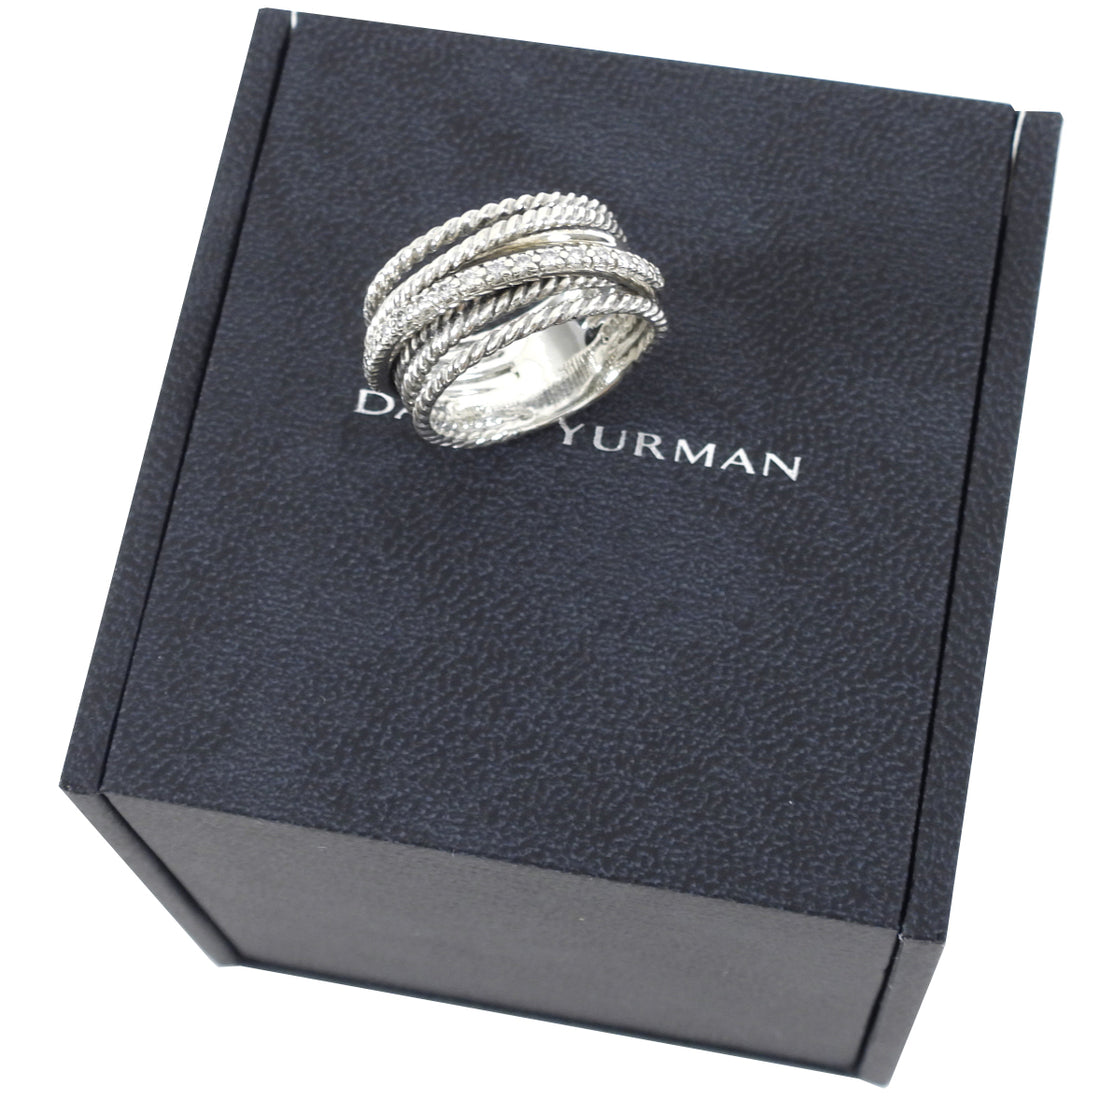 David Yurman Crossover Ring with Diamonds - 7